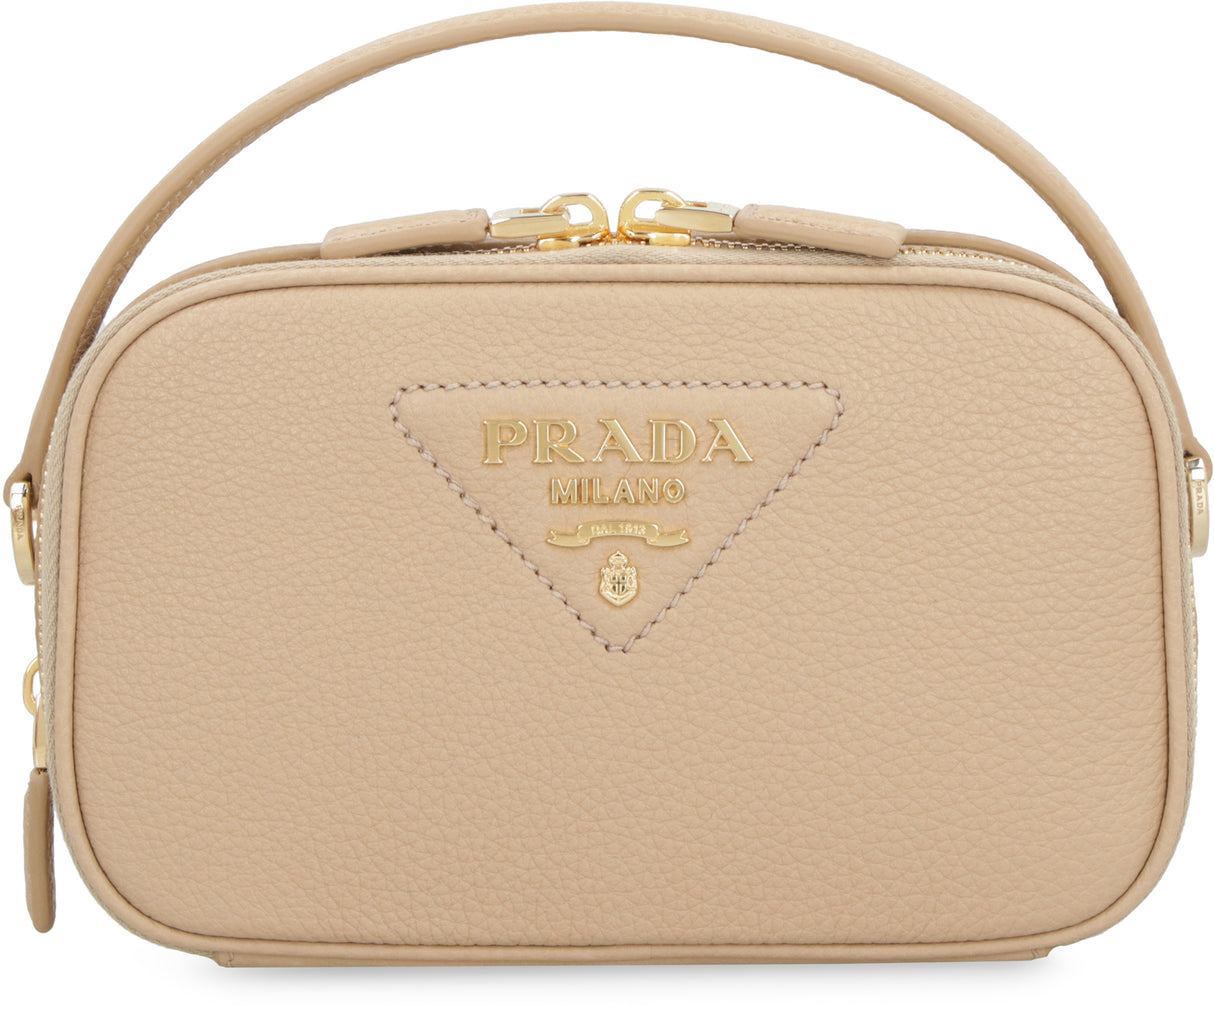 PRADA Mini Pebbled Calfskin Crossbody Handbag with Gold-Tone Accents, Beige - 19cm W x 11.5cm H x 6cm D